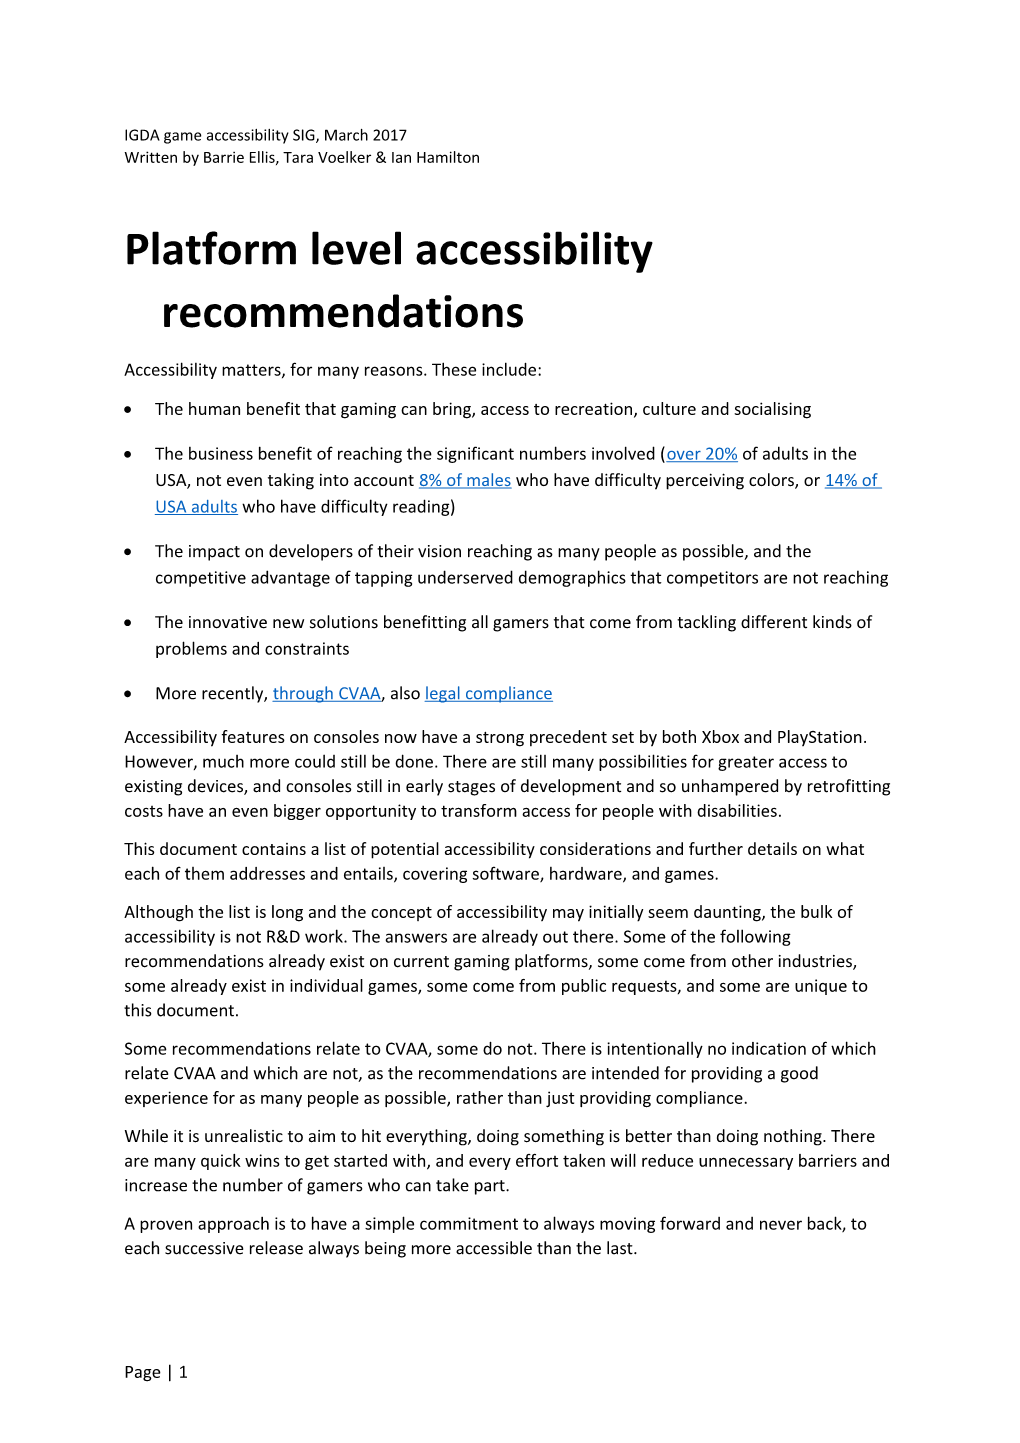 Platform Level Accessibility Recommendations